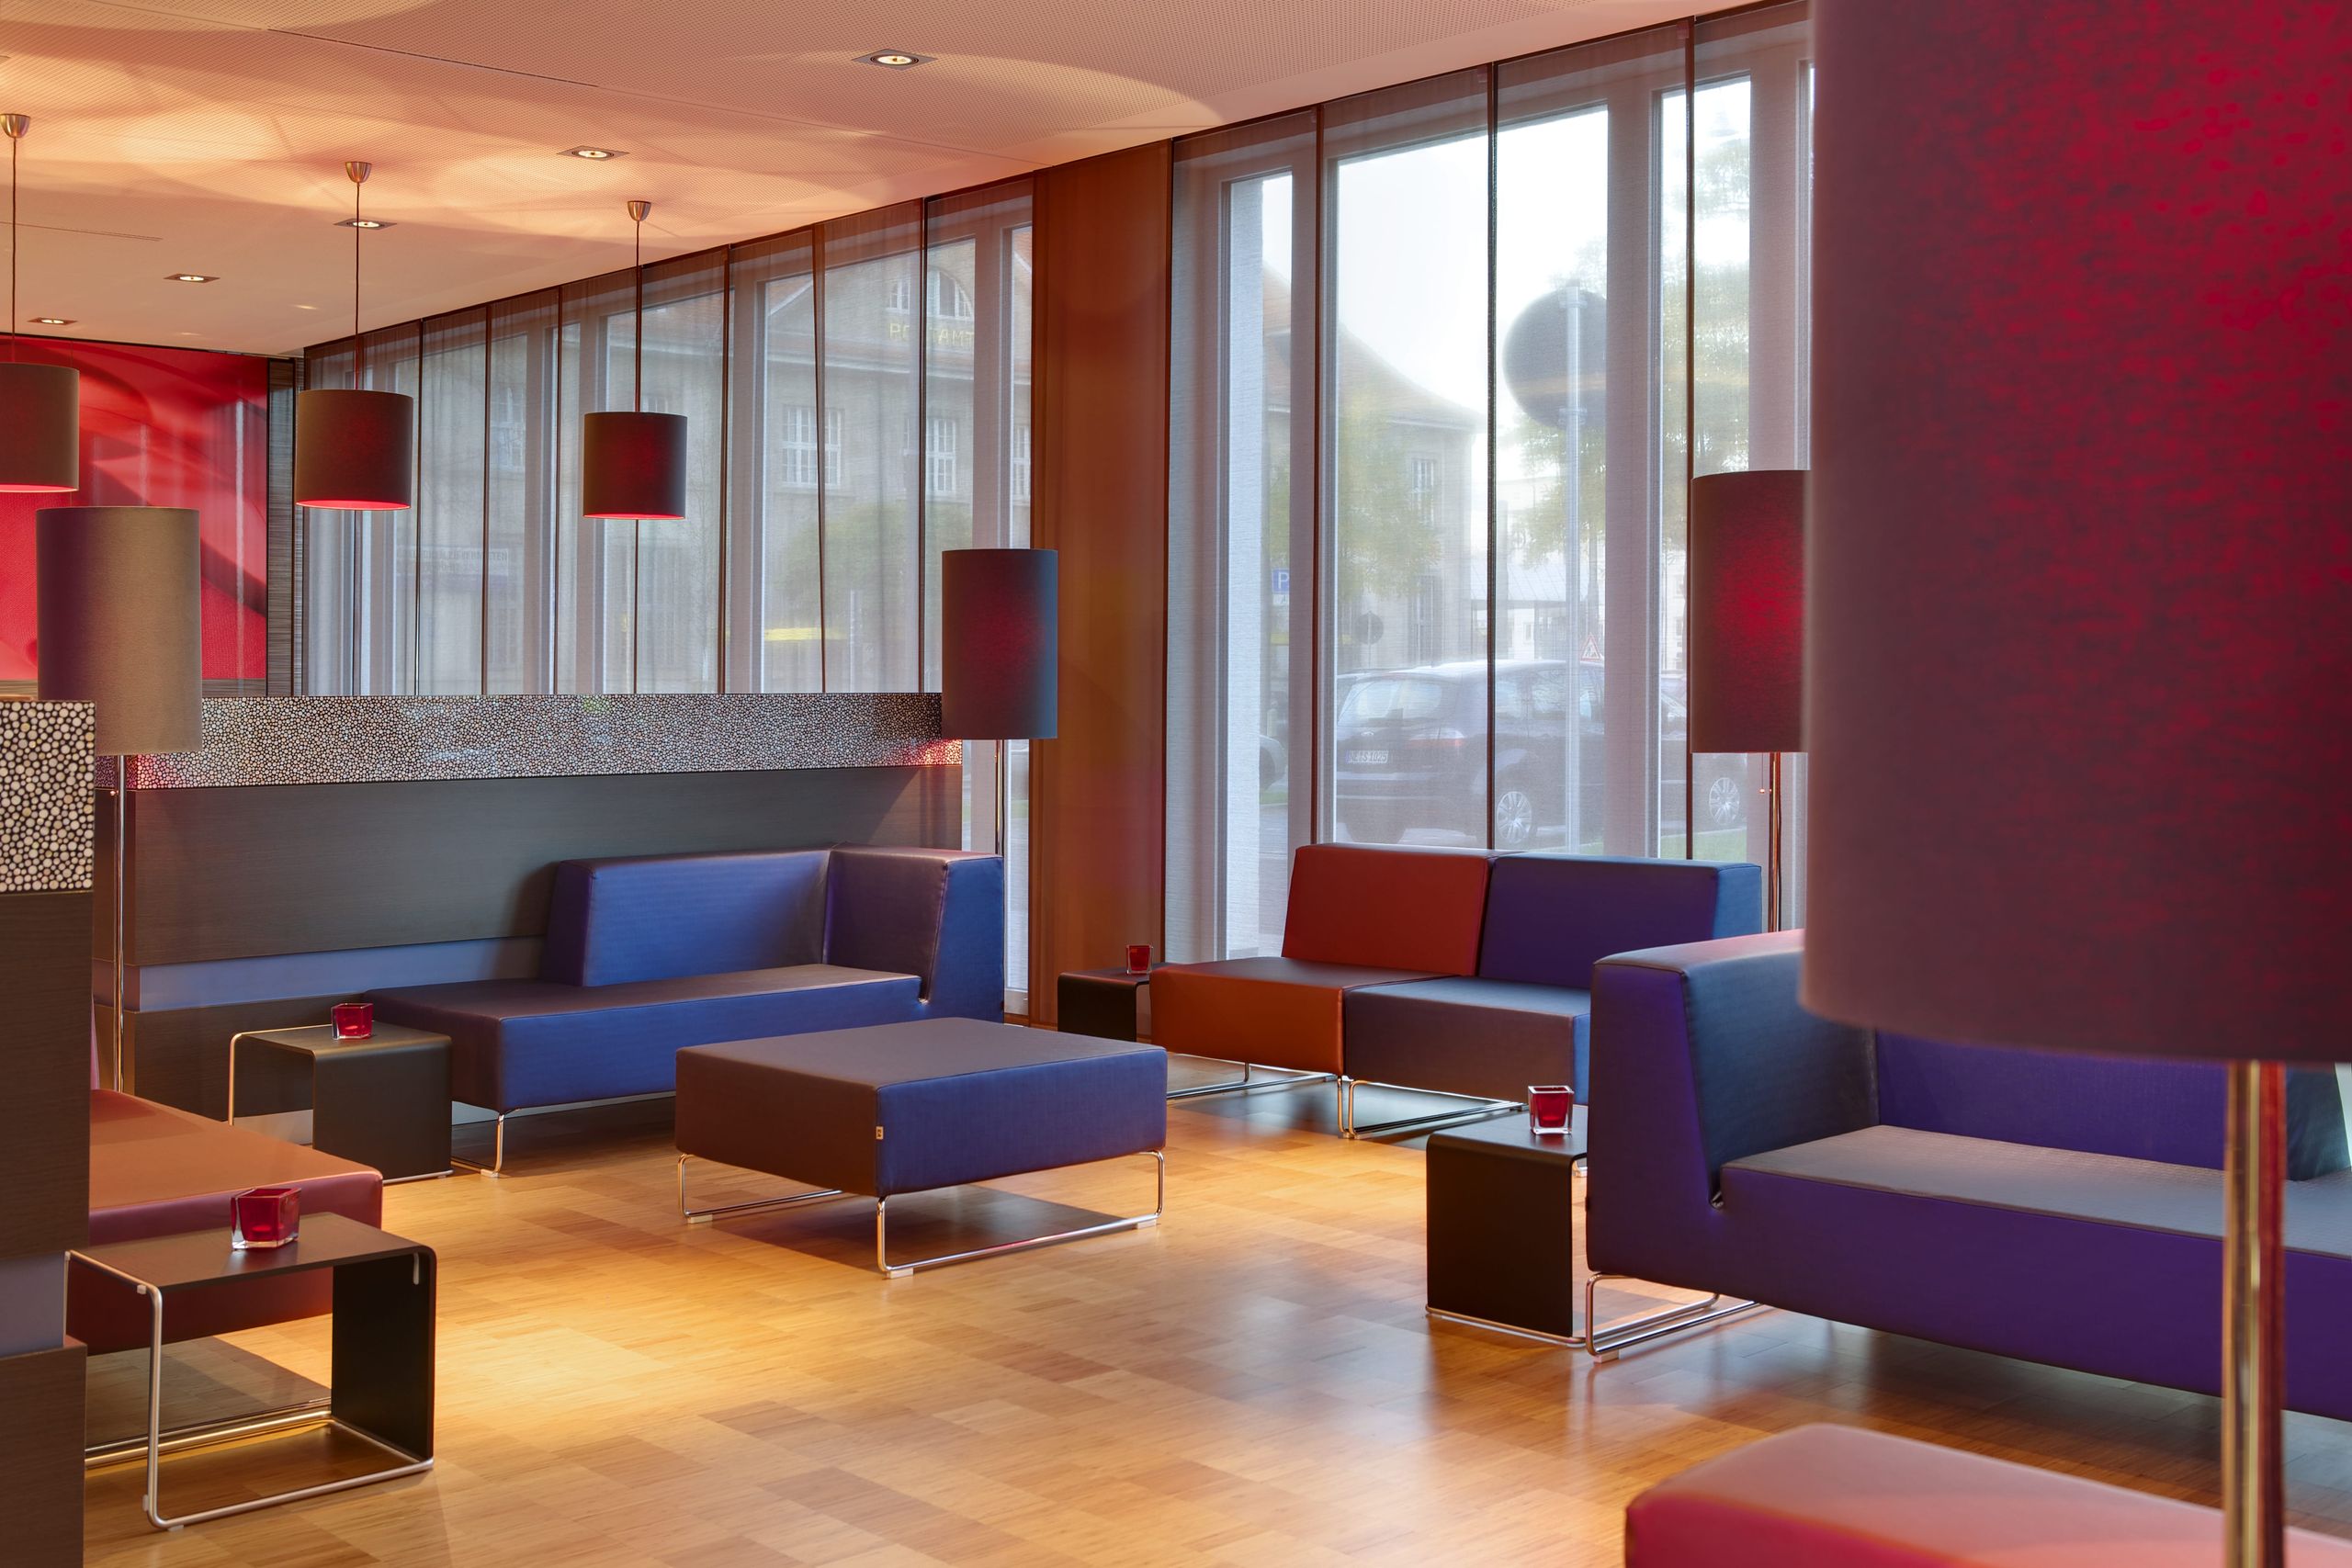 IntercityHotel Darmstadt - Lobby, Lounge